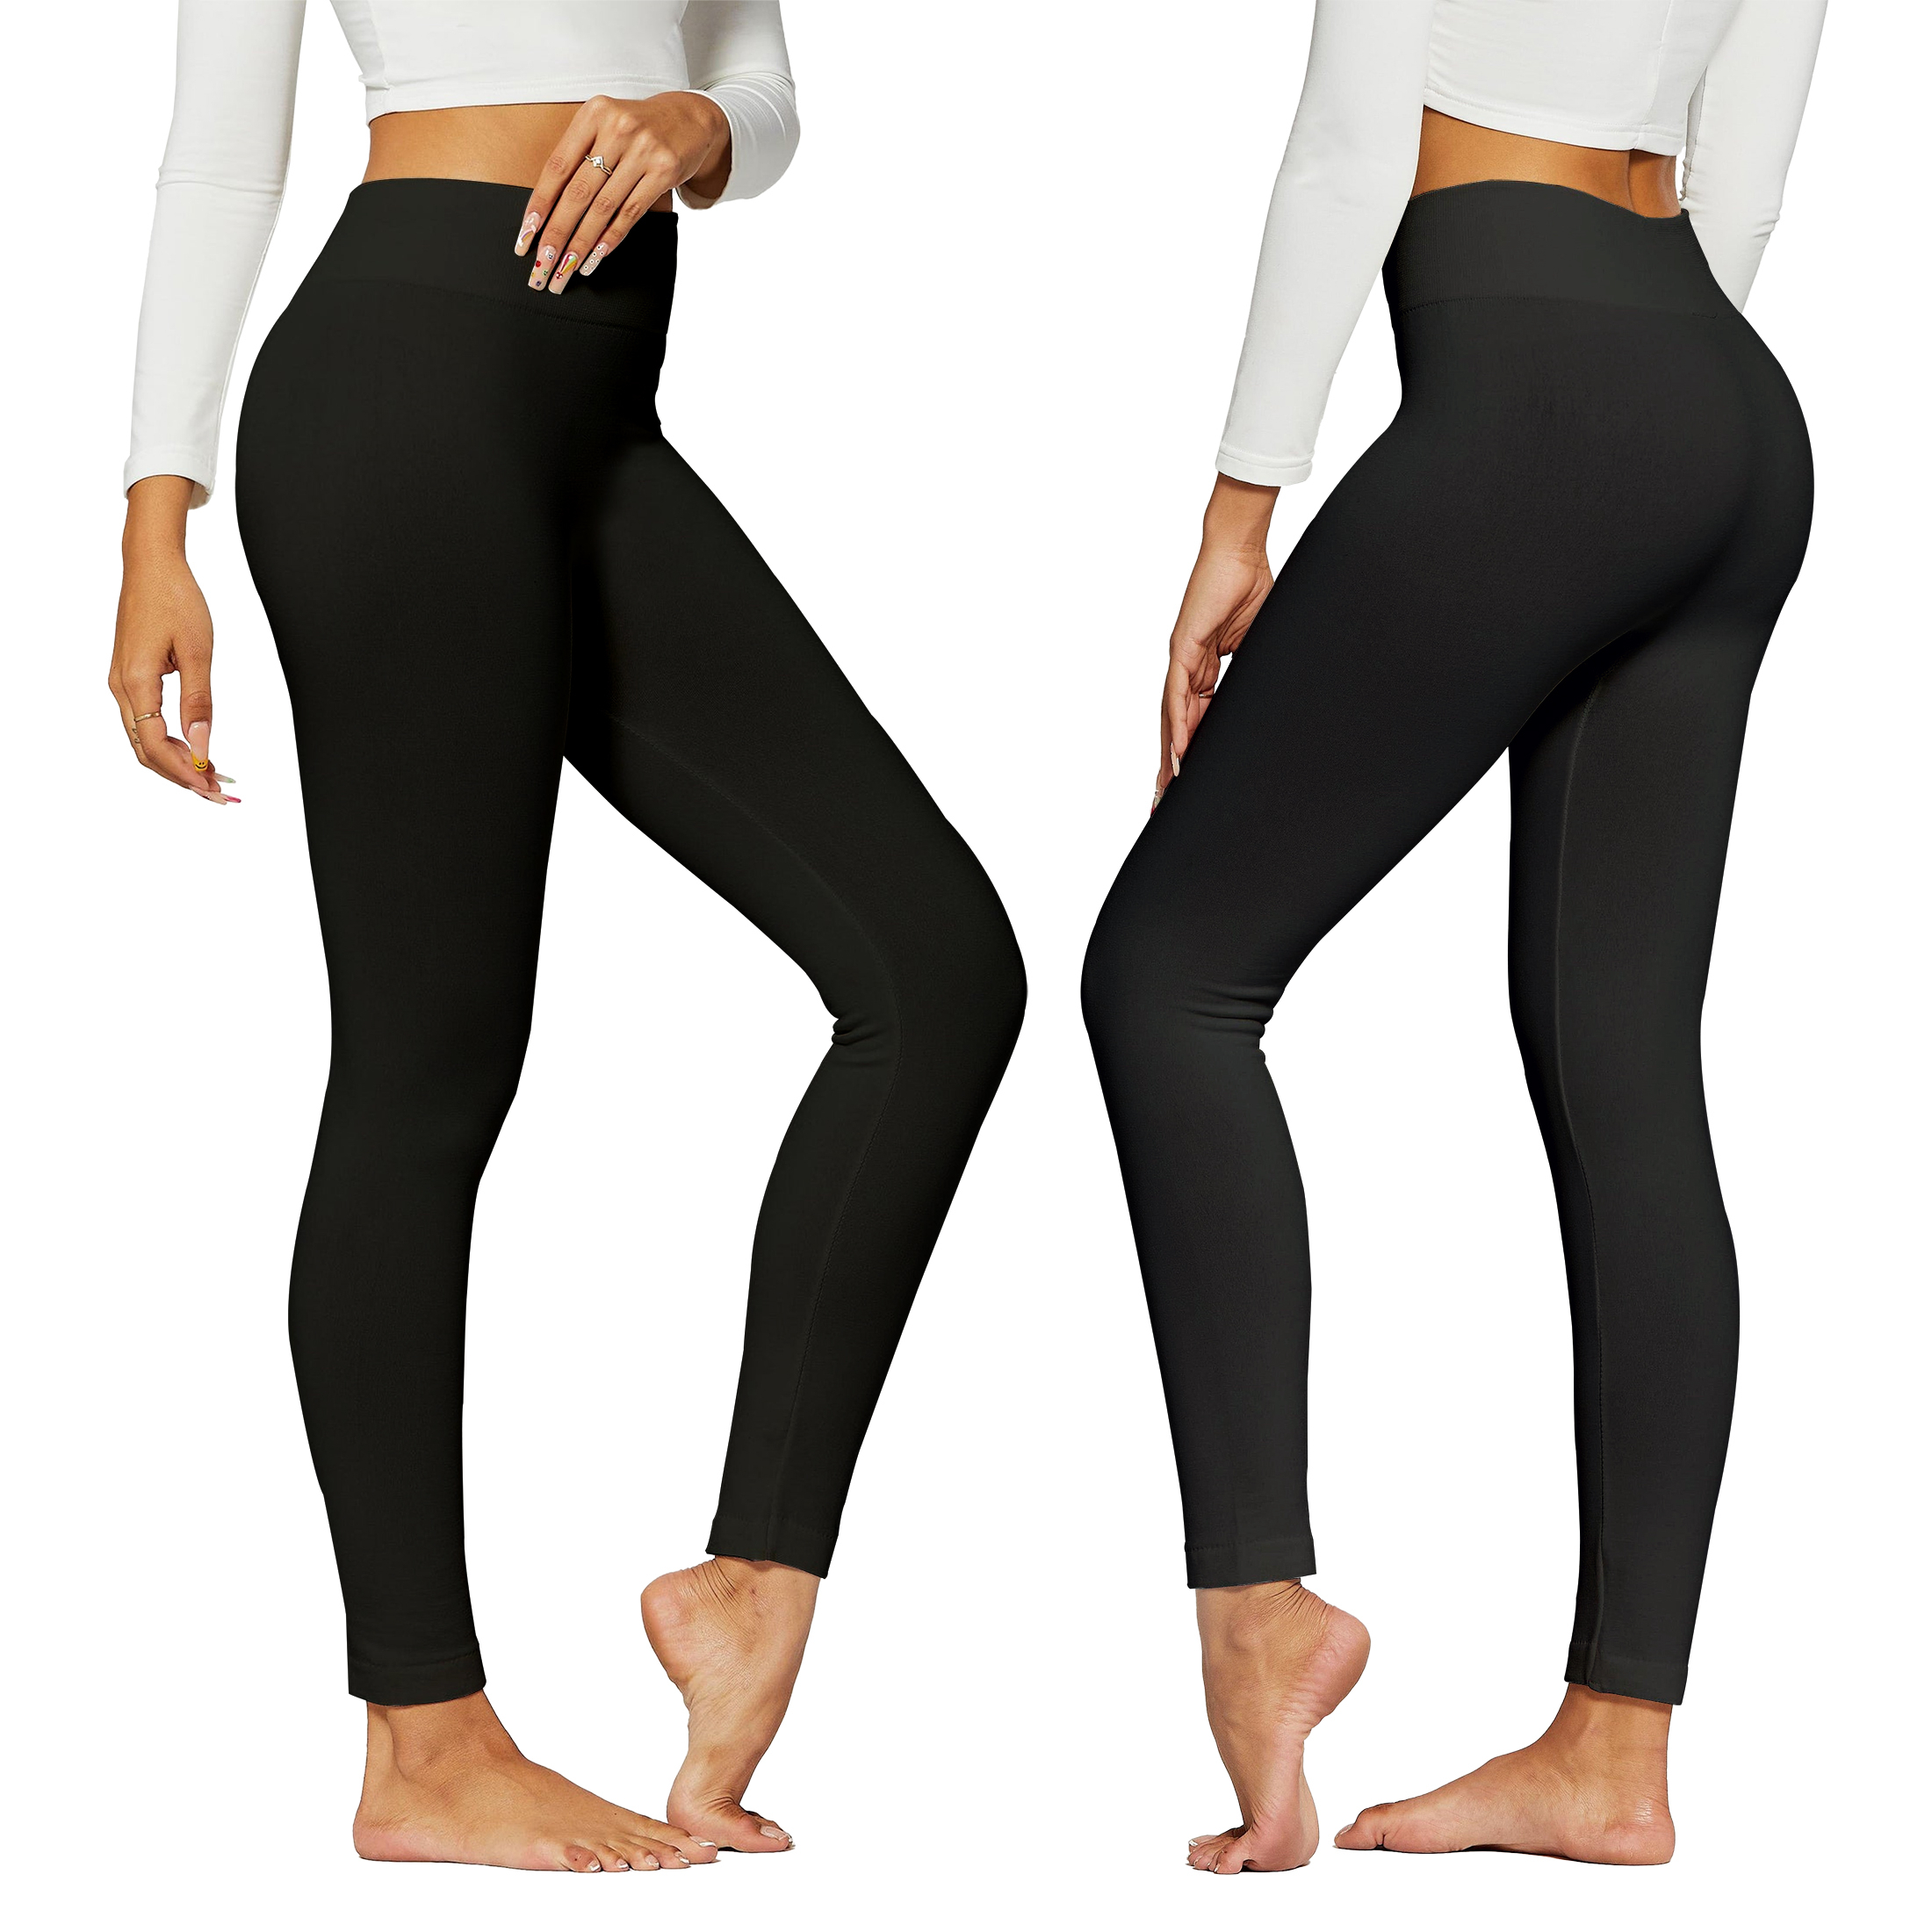 Women's Premium Quality High-Waist Fleece Lined Leggings (Plus Size Available) - Gray, 3X/4X